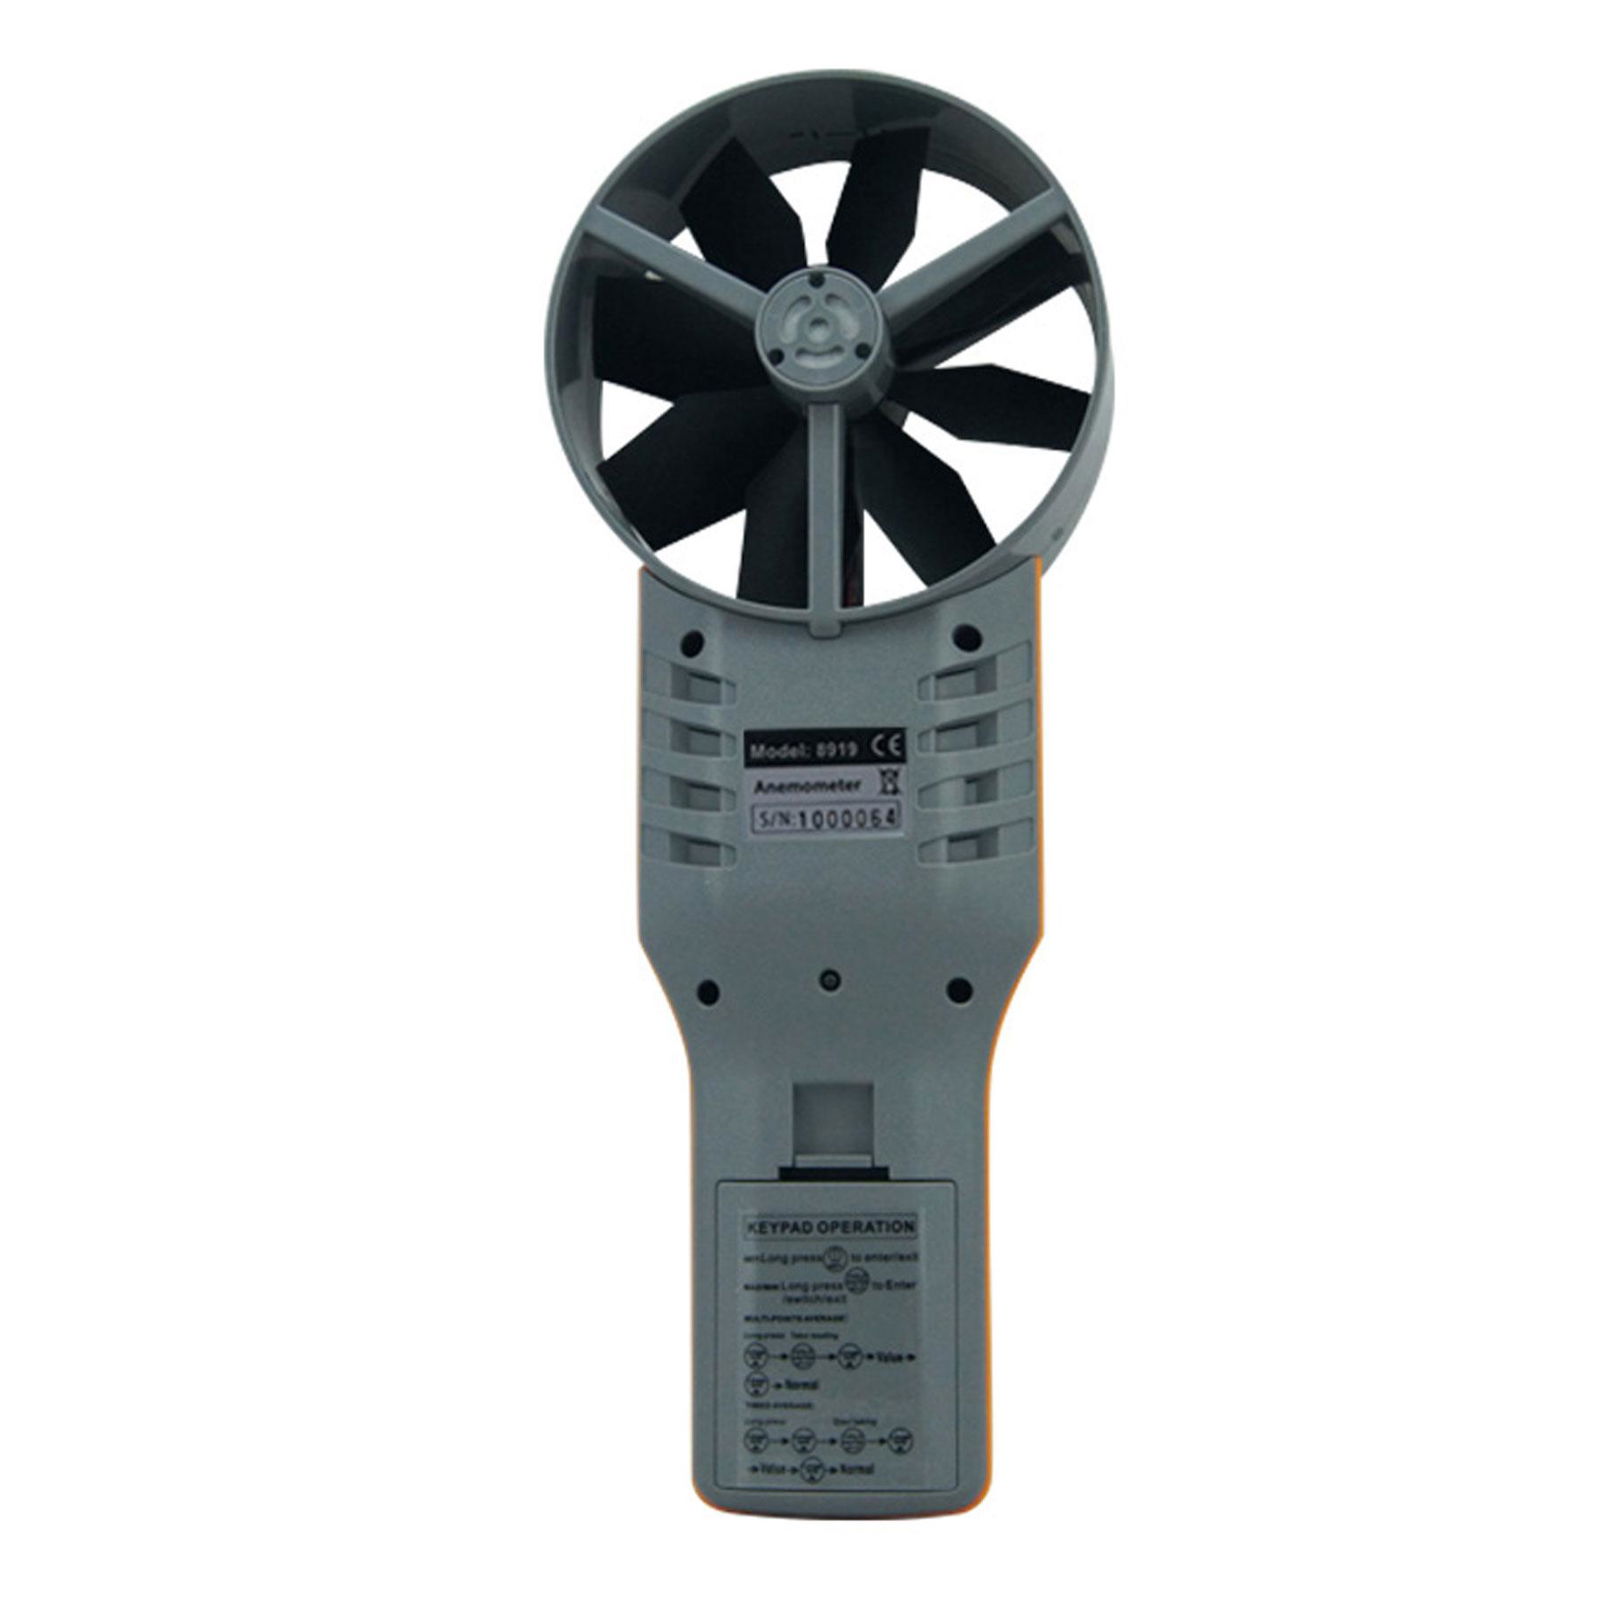 AZ8919 Portable CO2 Air Flow Meter wind speed meter Dew point Temperature Meter 2